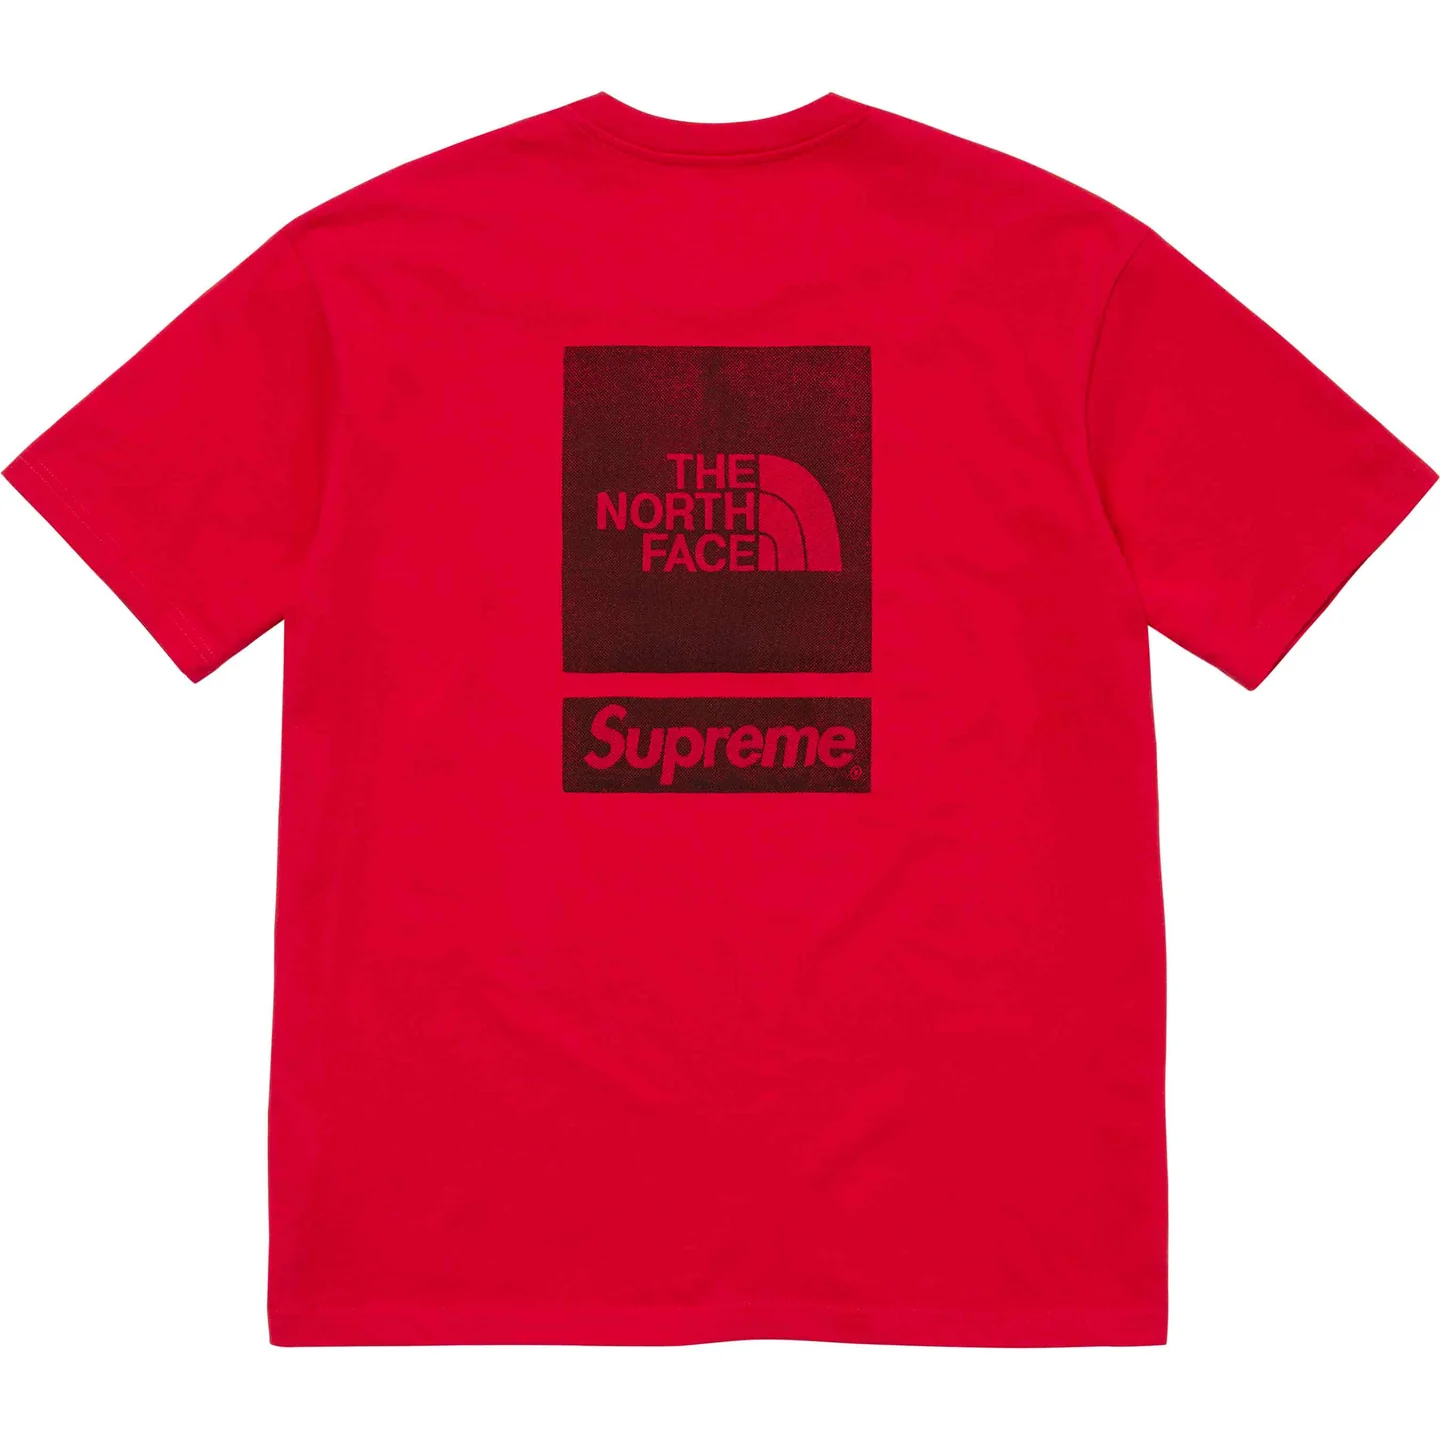 Supreme®/The North Face® S/S Top | Supreme 24ss